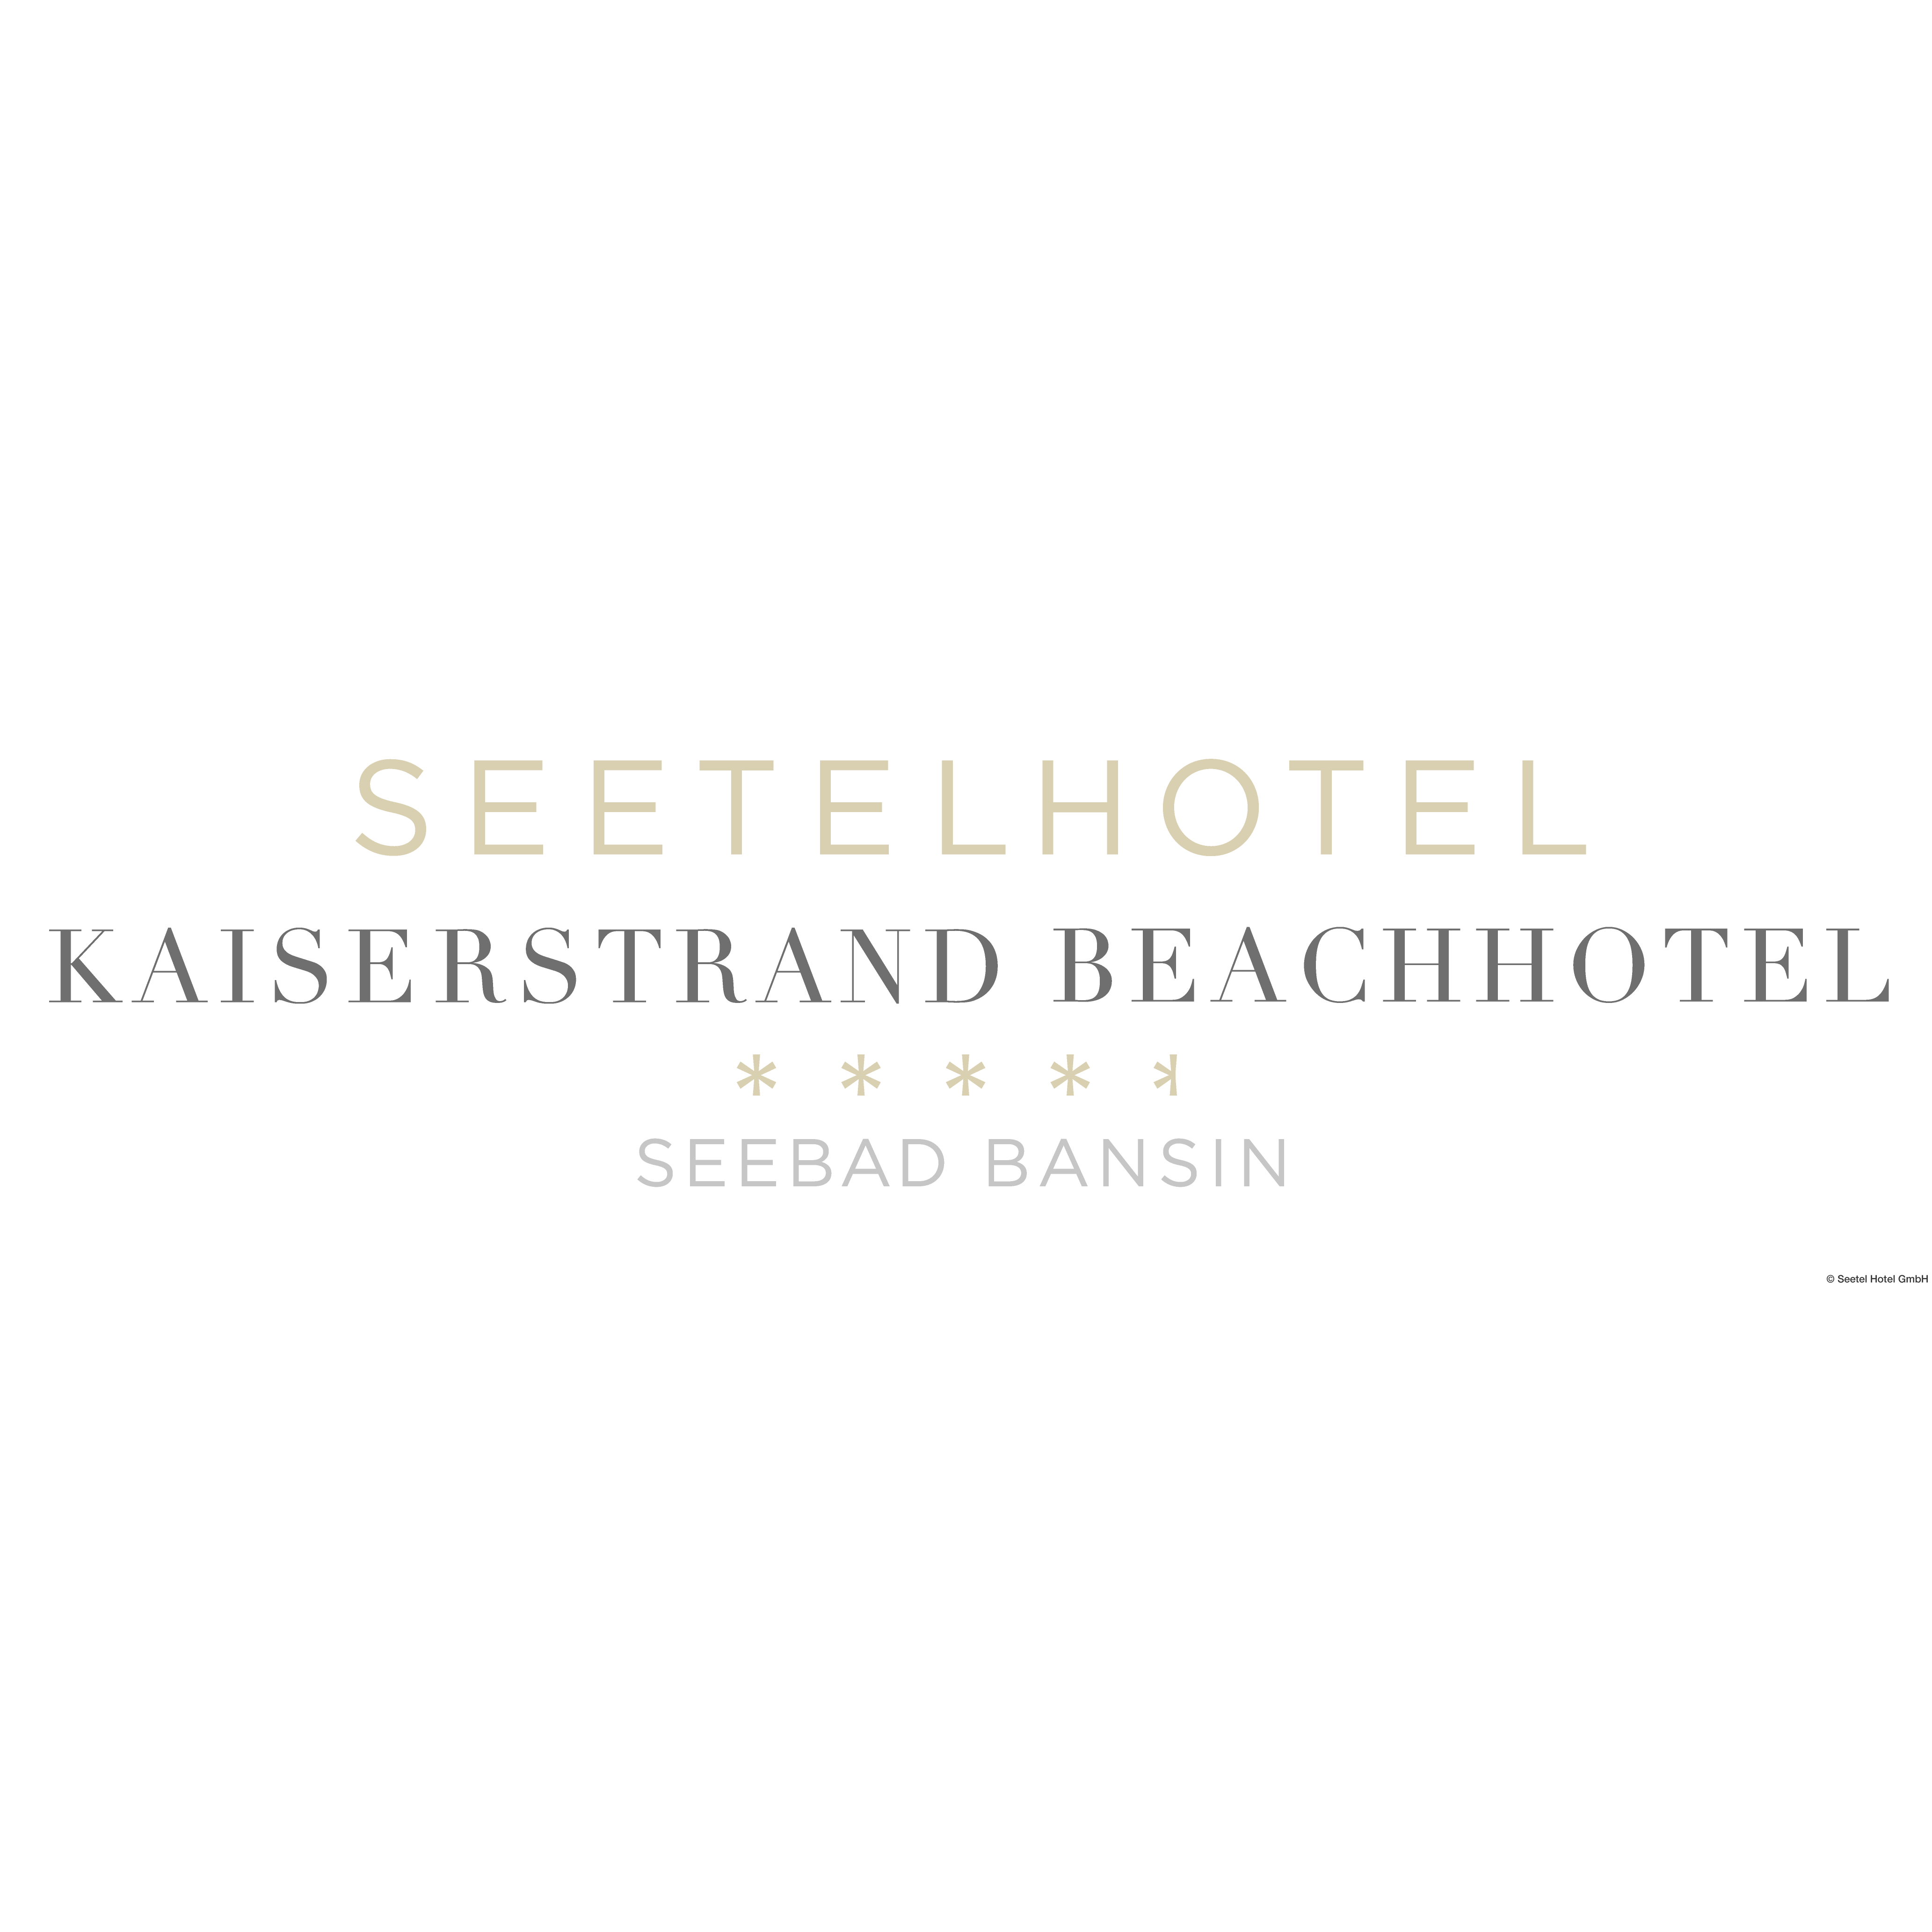 SEETELHOTEL Kaiserstrand Beachhotel in Ostseebad Heringsdorf - Logo